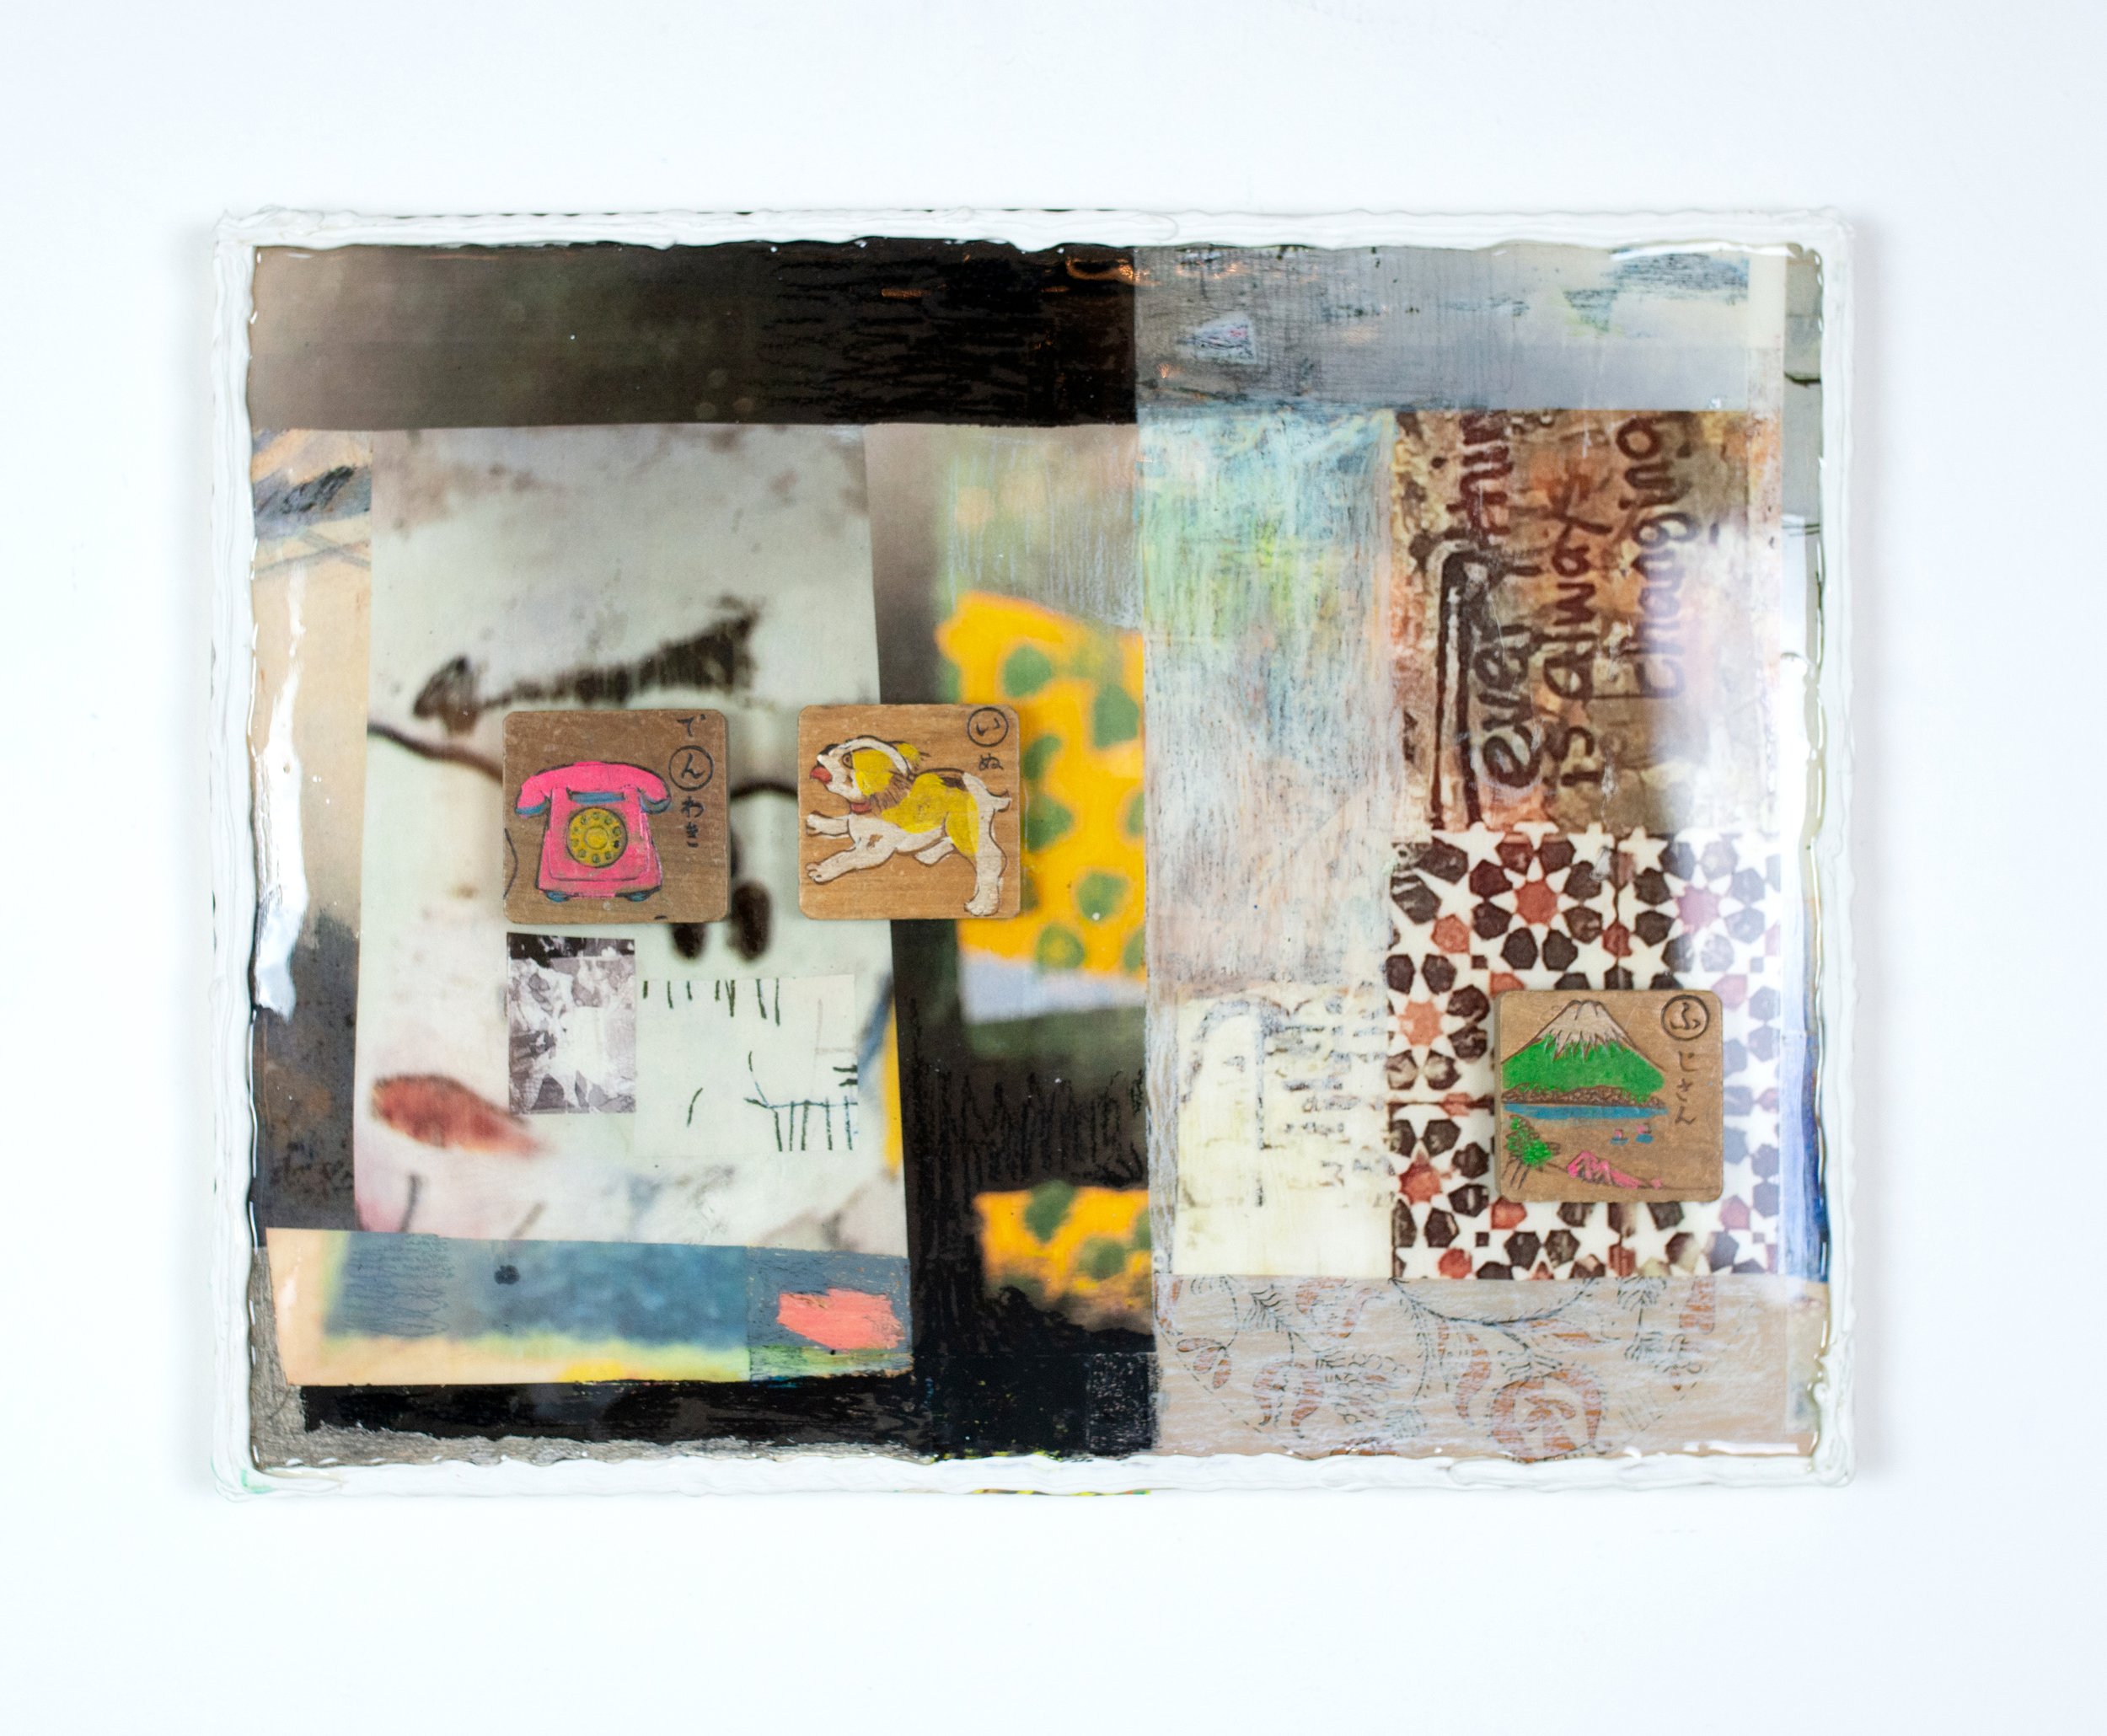    Fuji San    Acrylic, paper collage, pastel, pencil, children’s blocks, caulk on panel   14 x 18 in. 